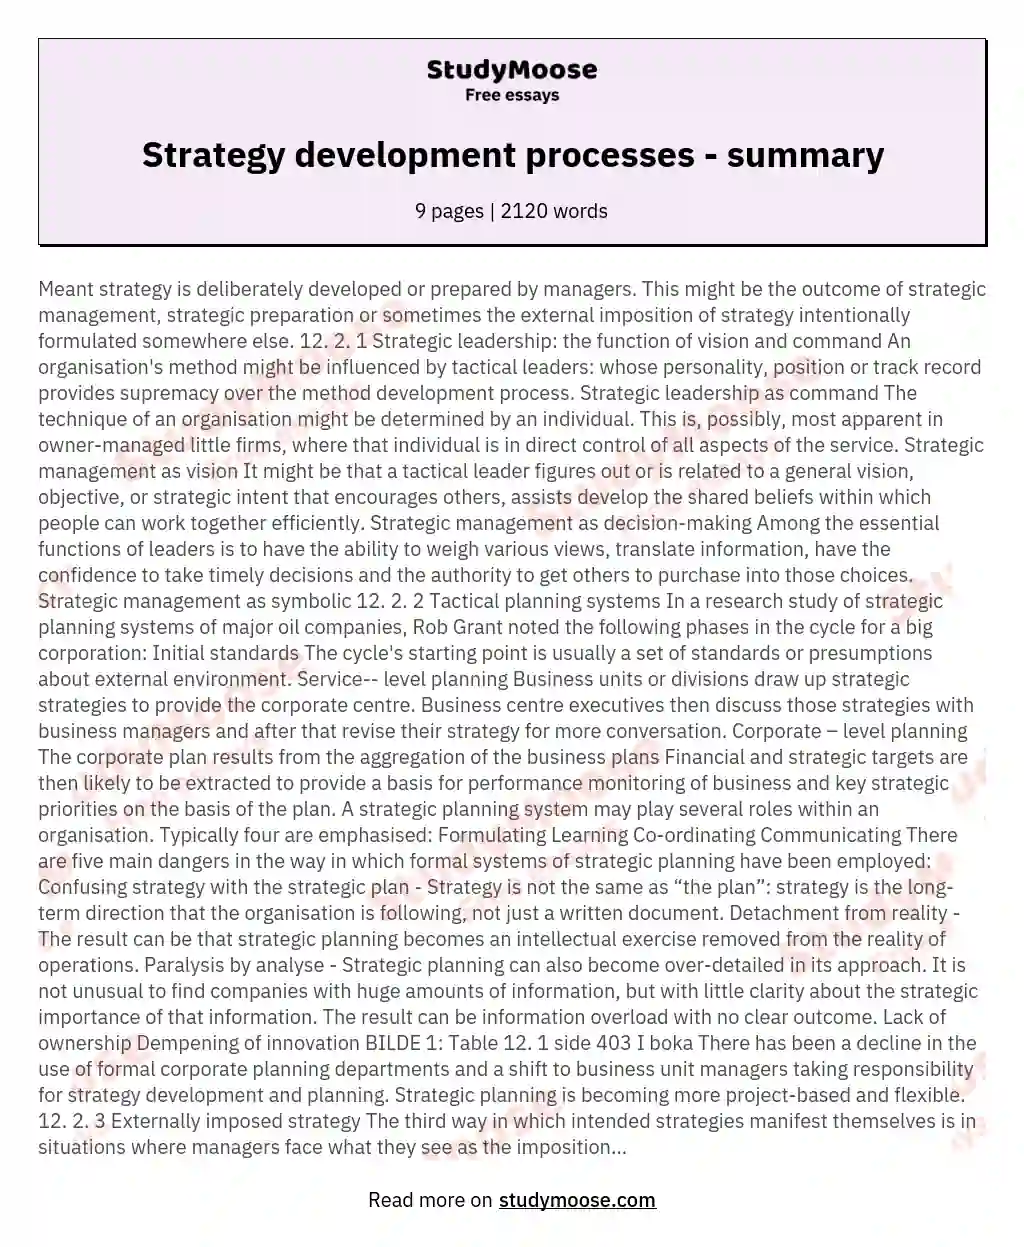 Strategy development processes - summary essay